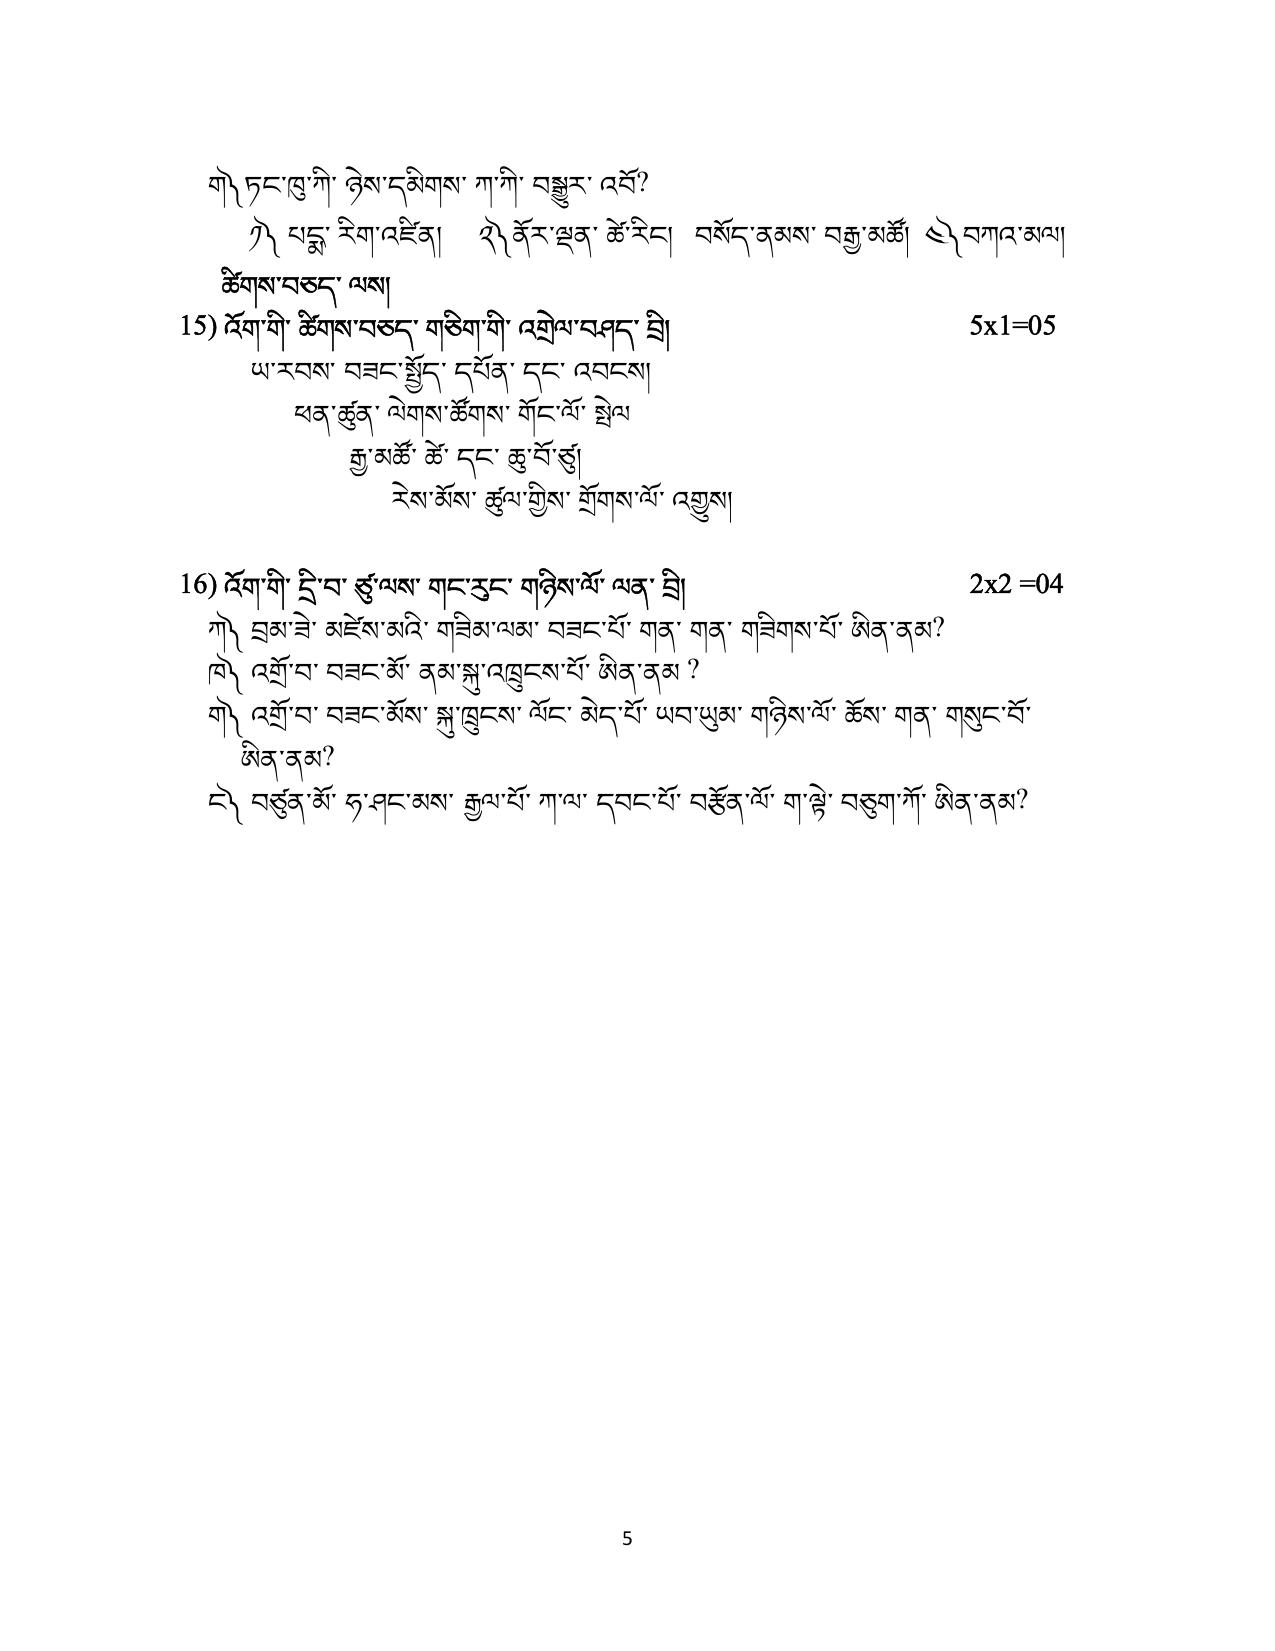 CBSE Class 12 Bhutia Skill Education-Sample Paper 2019-20 - Page 5